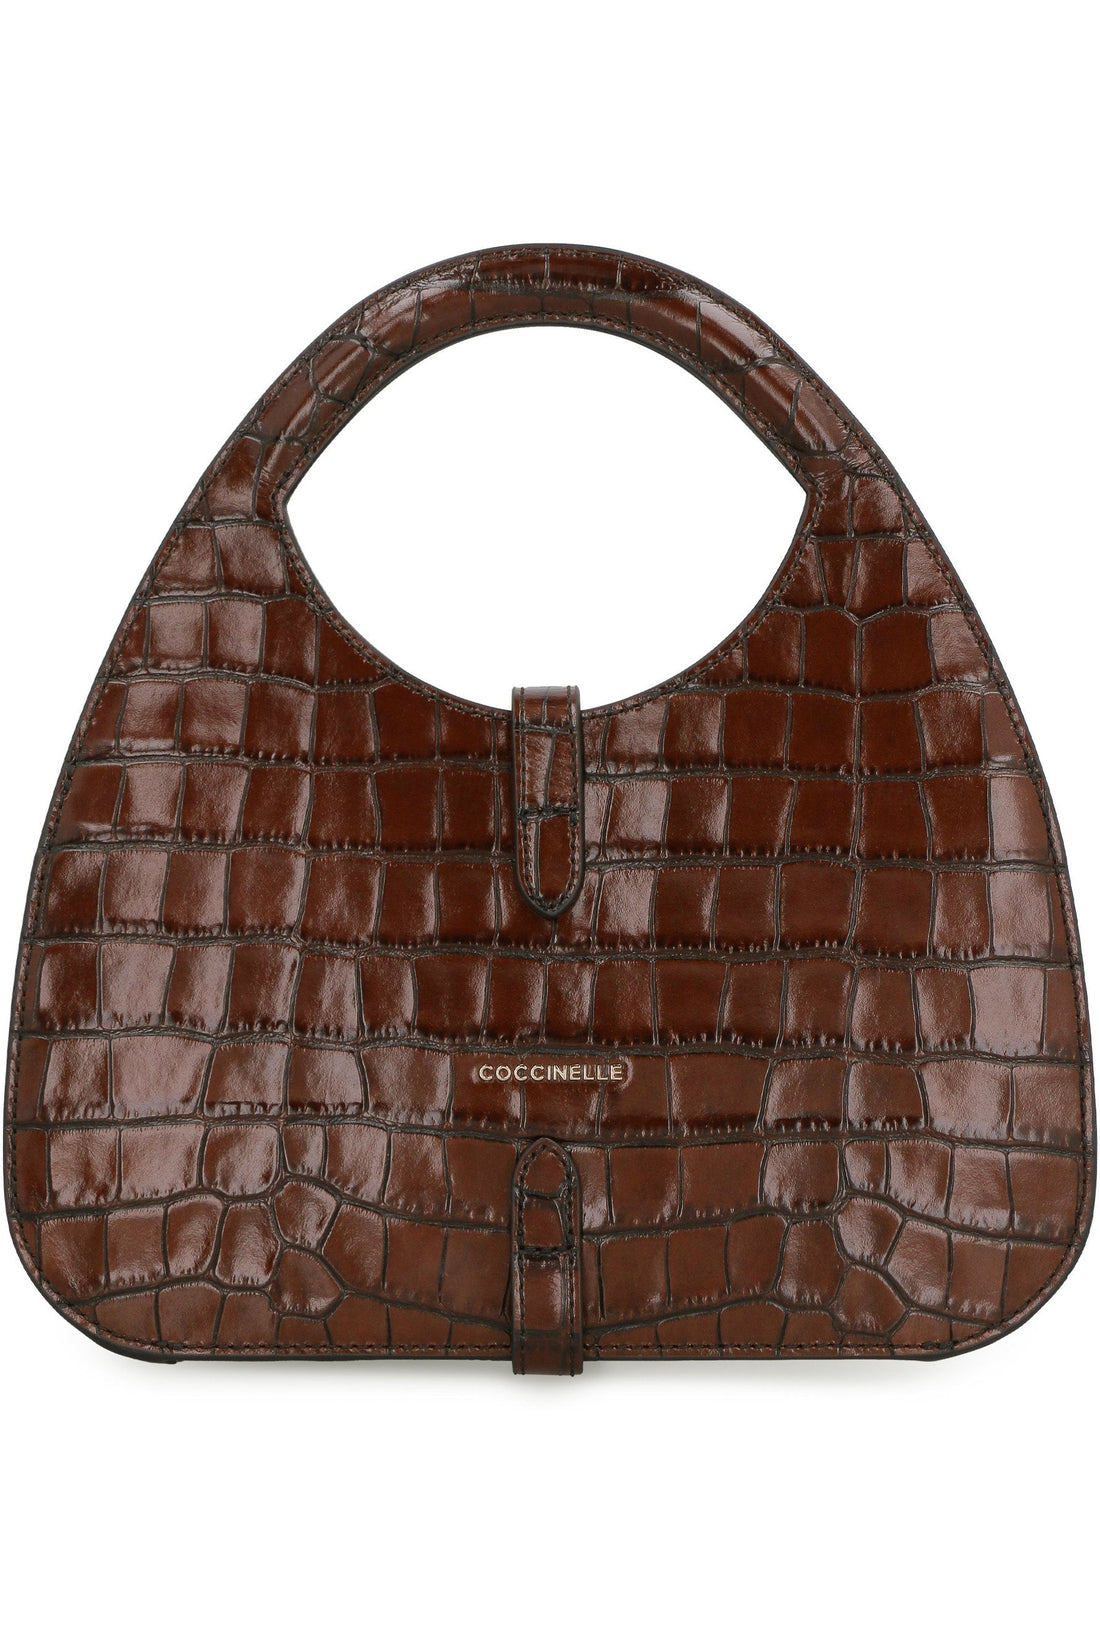 Coccinelle-OUTLET-SALE-Cosima Croco Shiny handbag-ARCHIVIST